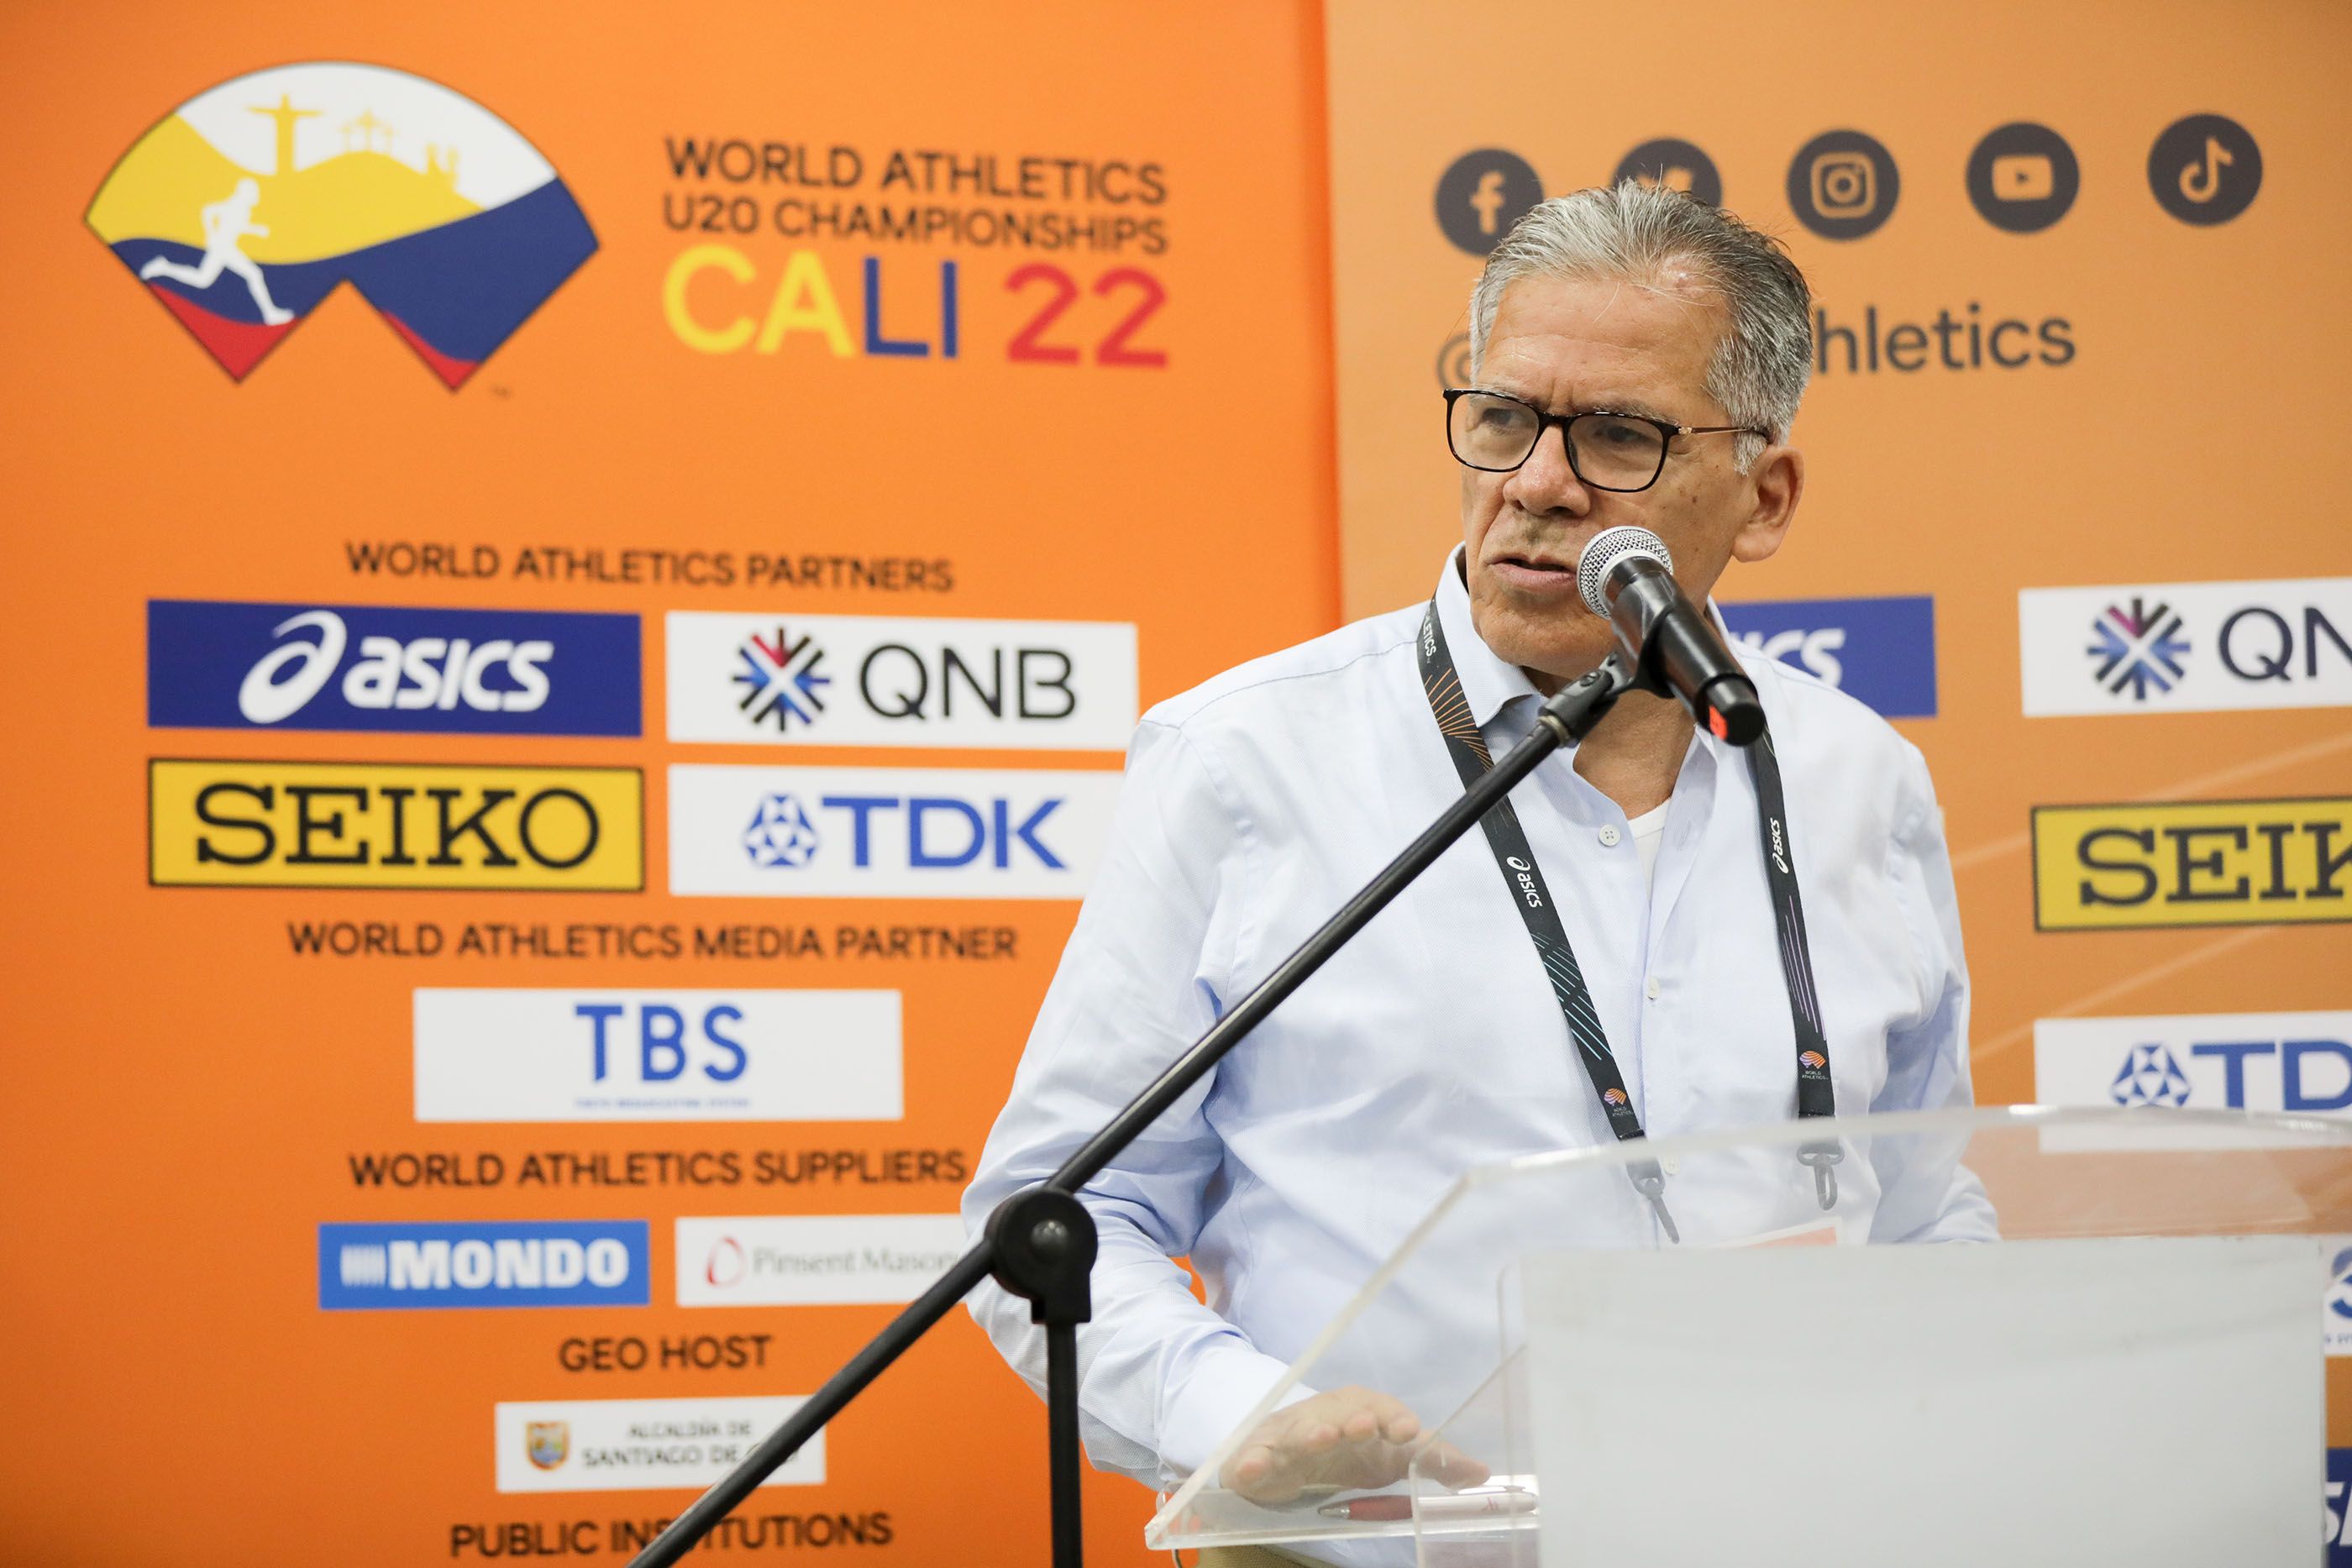 Ramiro Varela, President of the Local Organising Committee of the World Athletics U20 Championships Cali 22